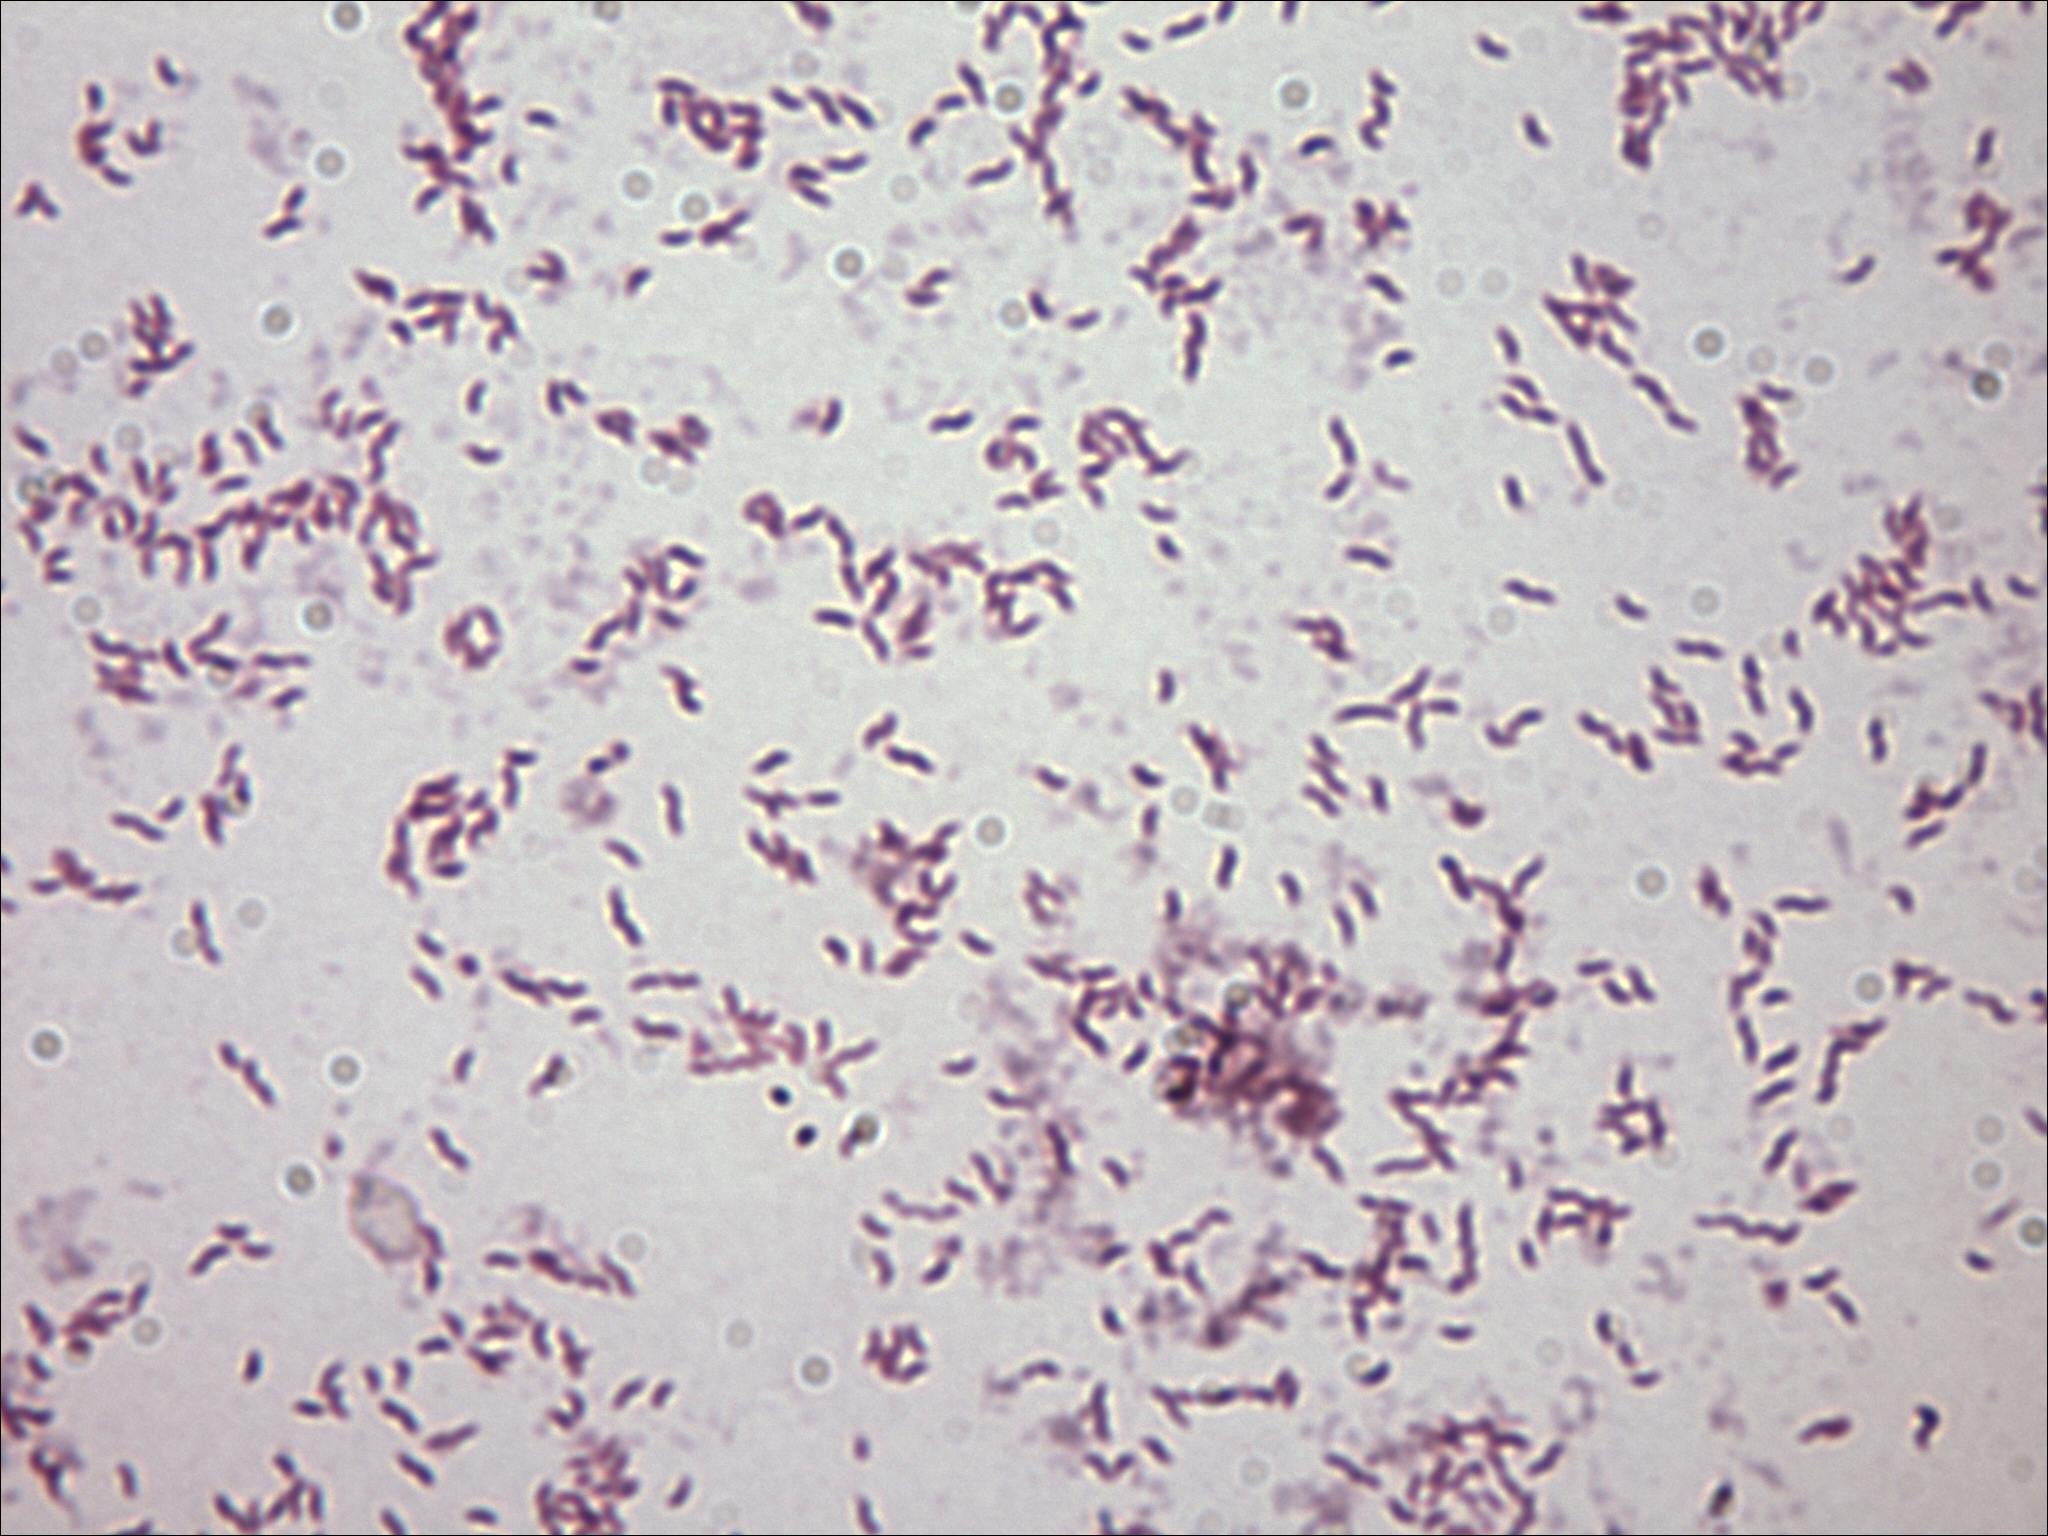 Gram stain of Campylobacter jejuni (source)